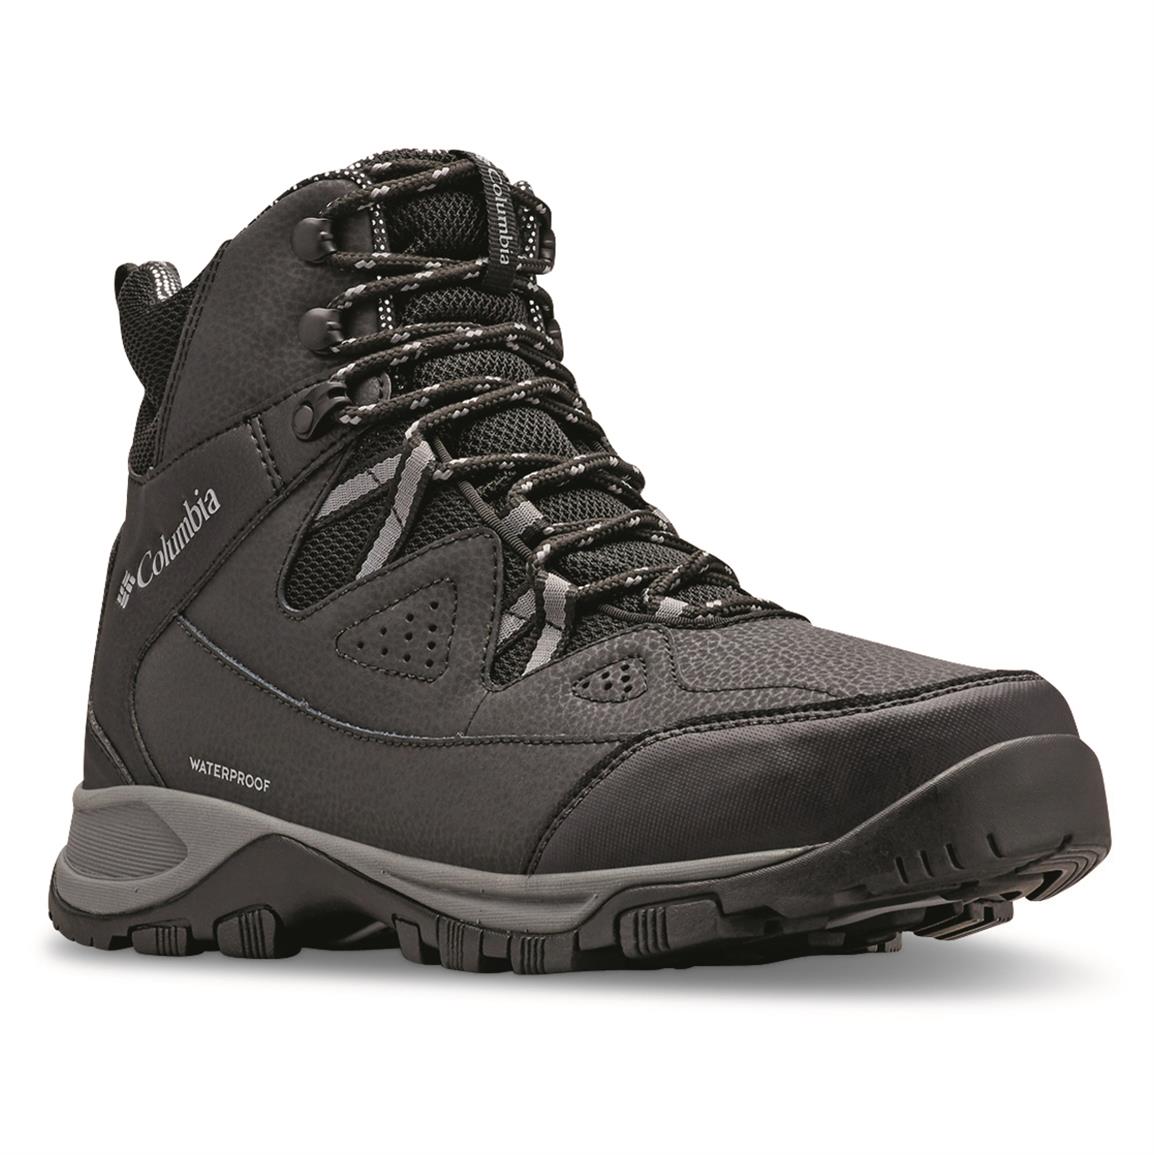 Columbia Men's Liftop III Waterproof Insulated Hiking Boots, 200 Gram, Black/ti Grey Steel